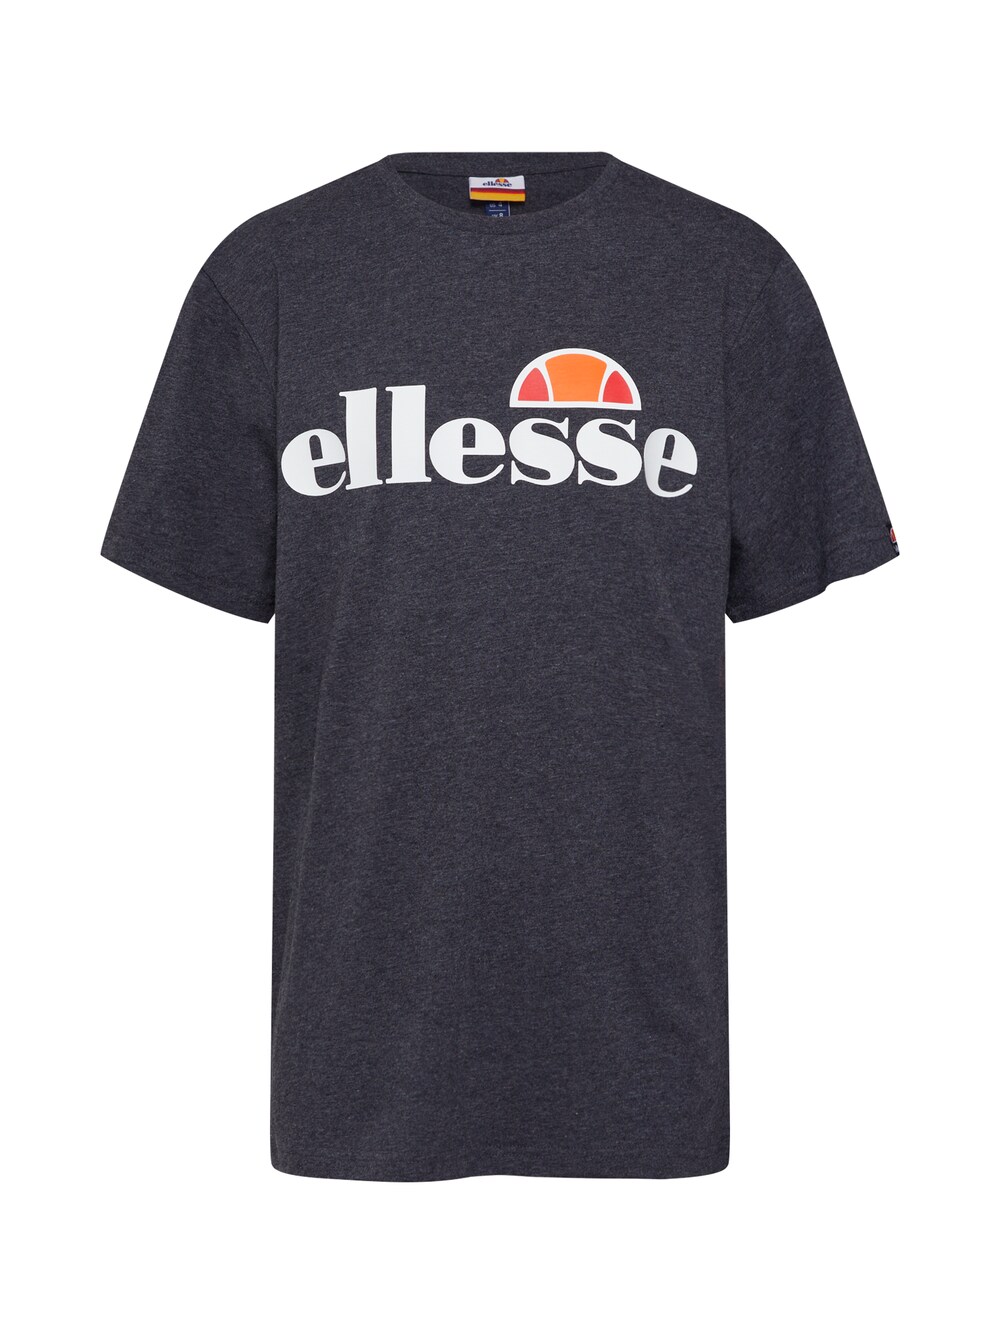 Рубашка ELLESSE Albany, темно-серый